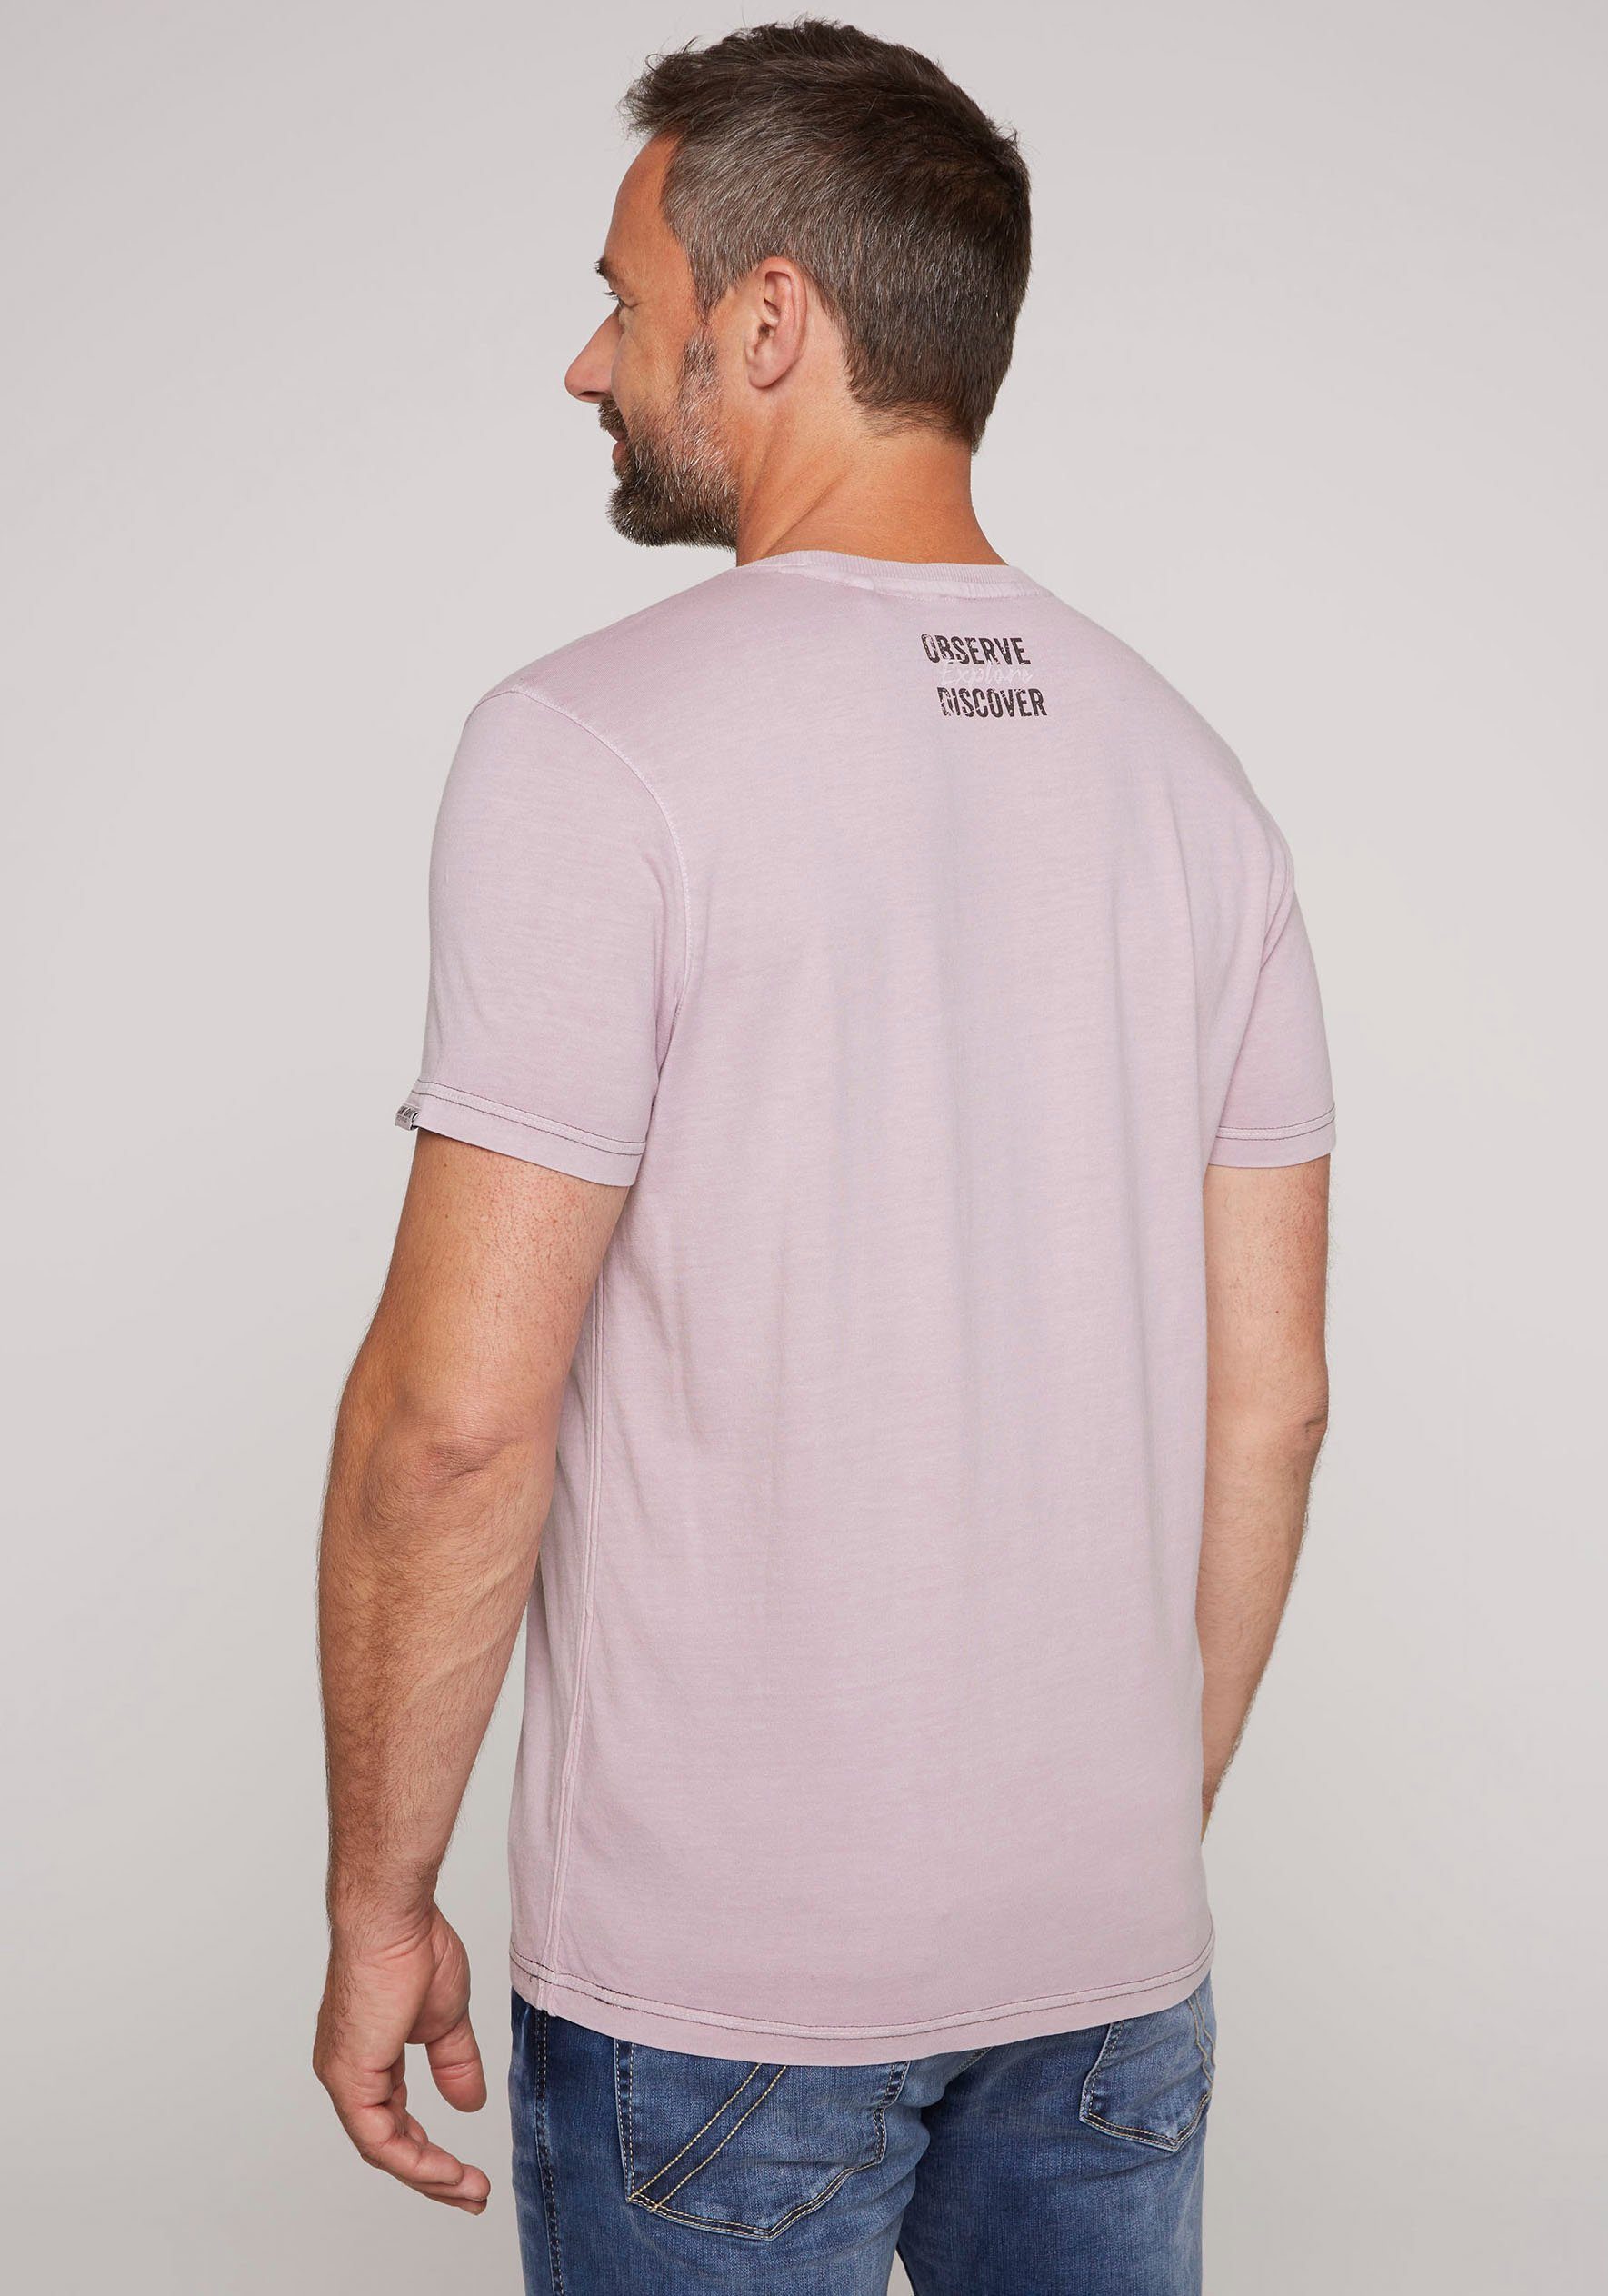 CAMP DAVID T-Shirt mit violet Kontrastnähten french